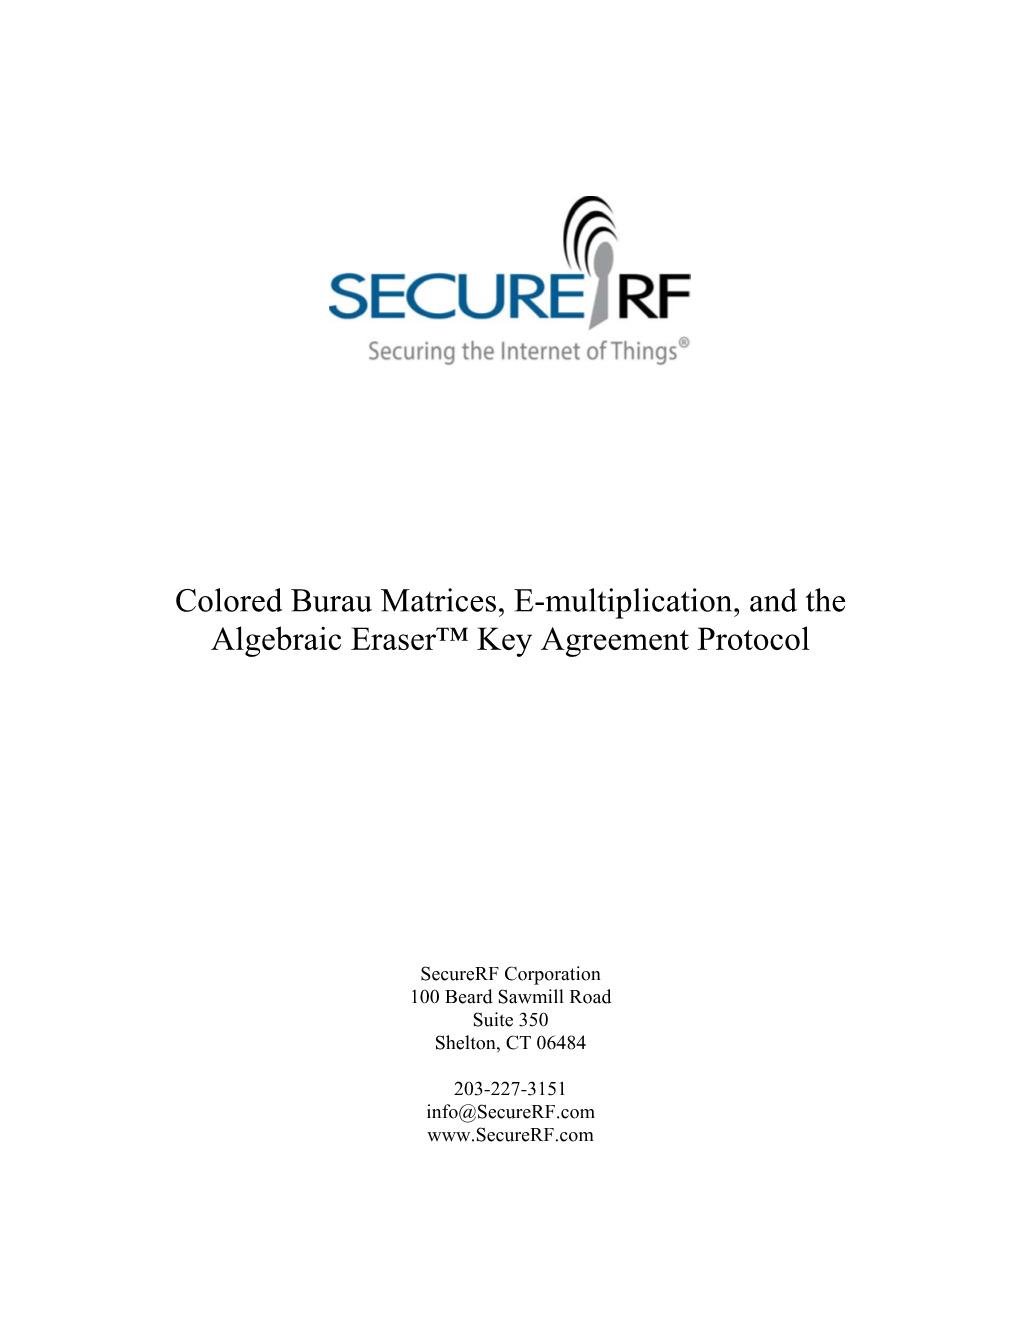 Colored Burau Matrices, E-Multiplication, and the Algebraic Eraser™ Key Agreement Protocol